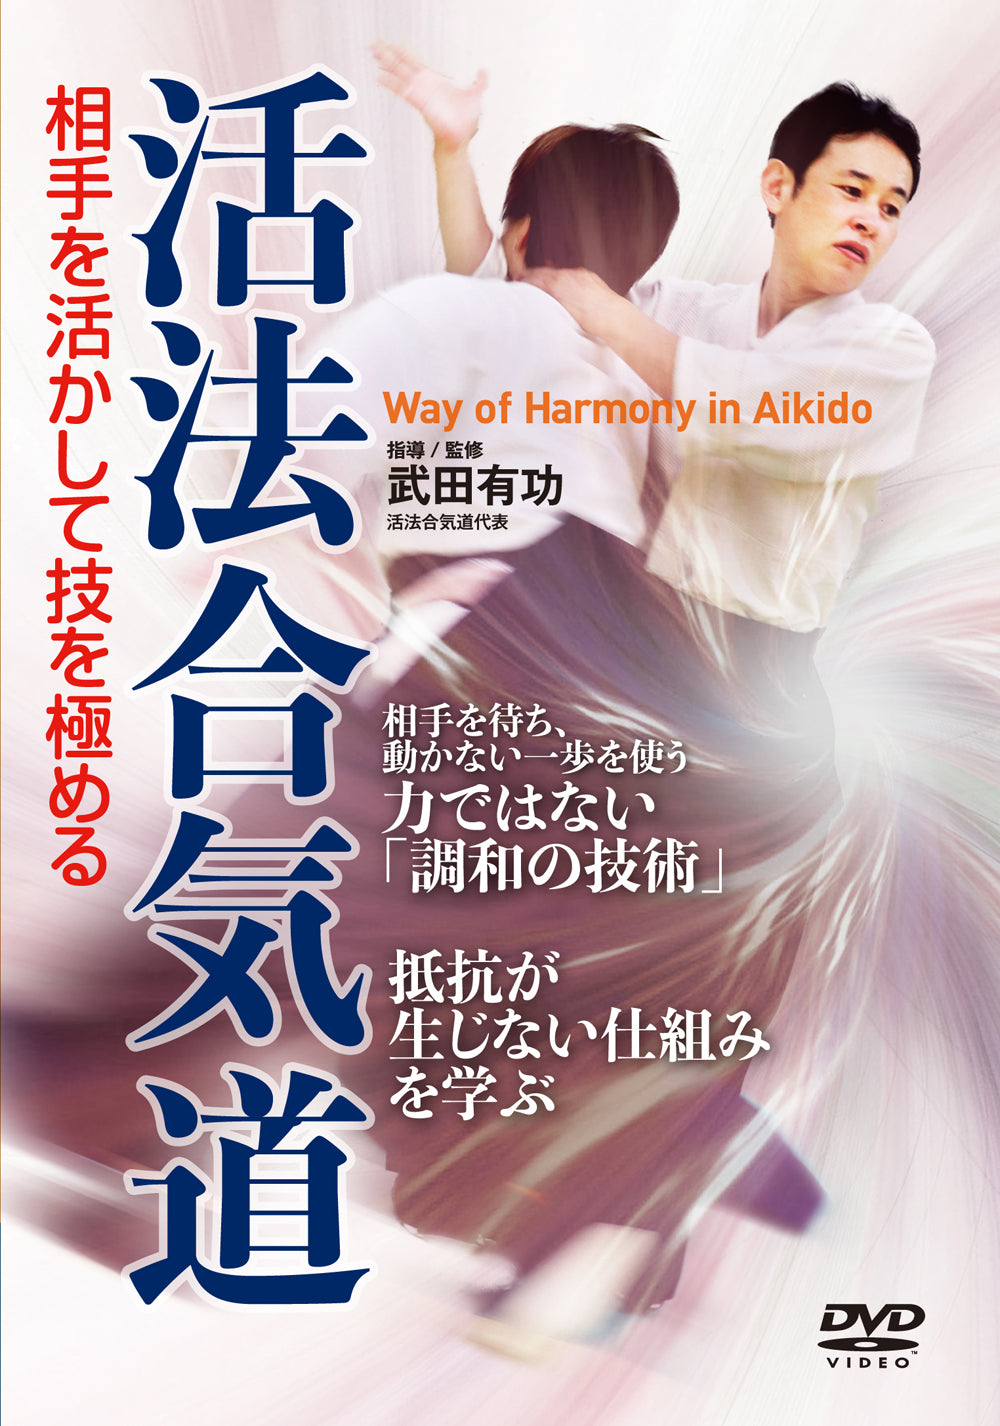 Way of Harmony in Aikido DVD by Yuko Takeda - Budovideos